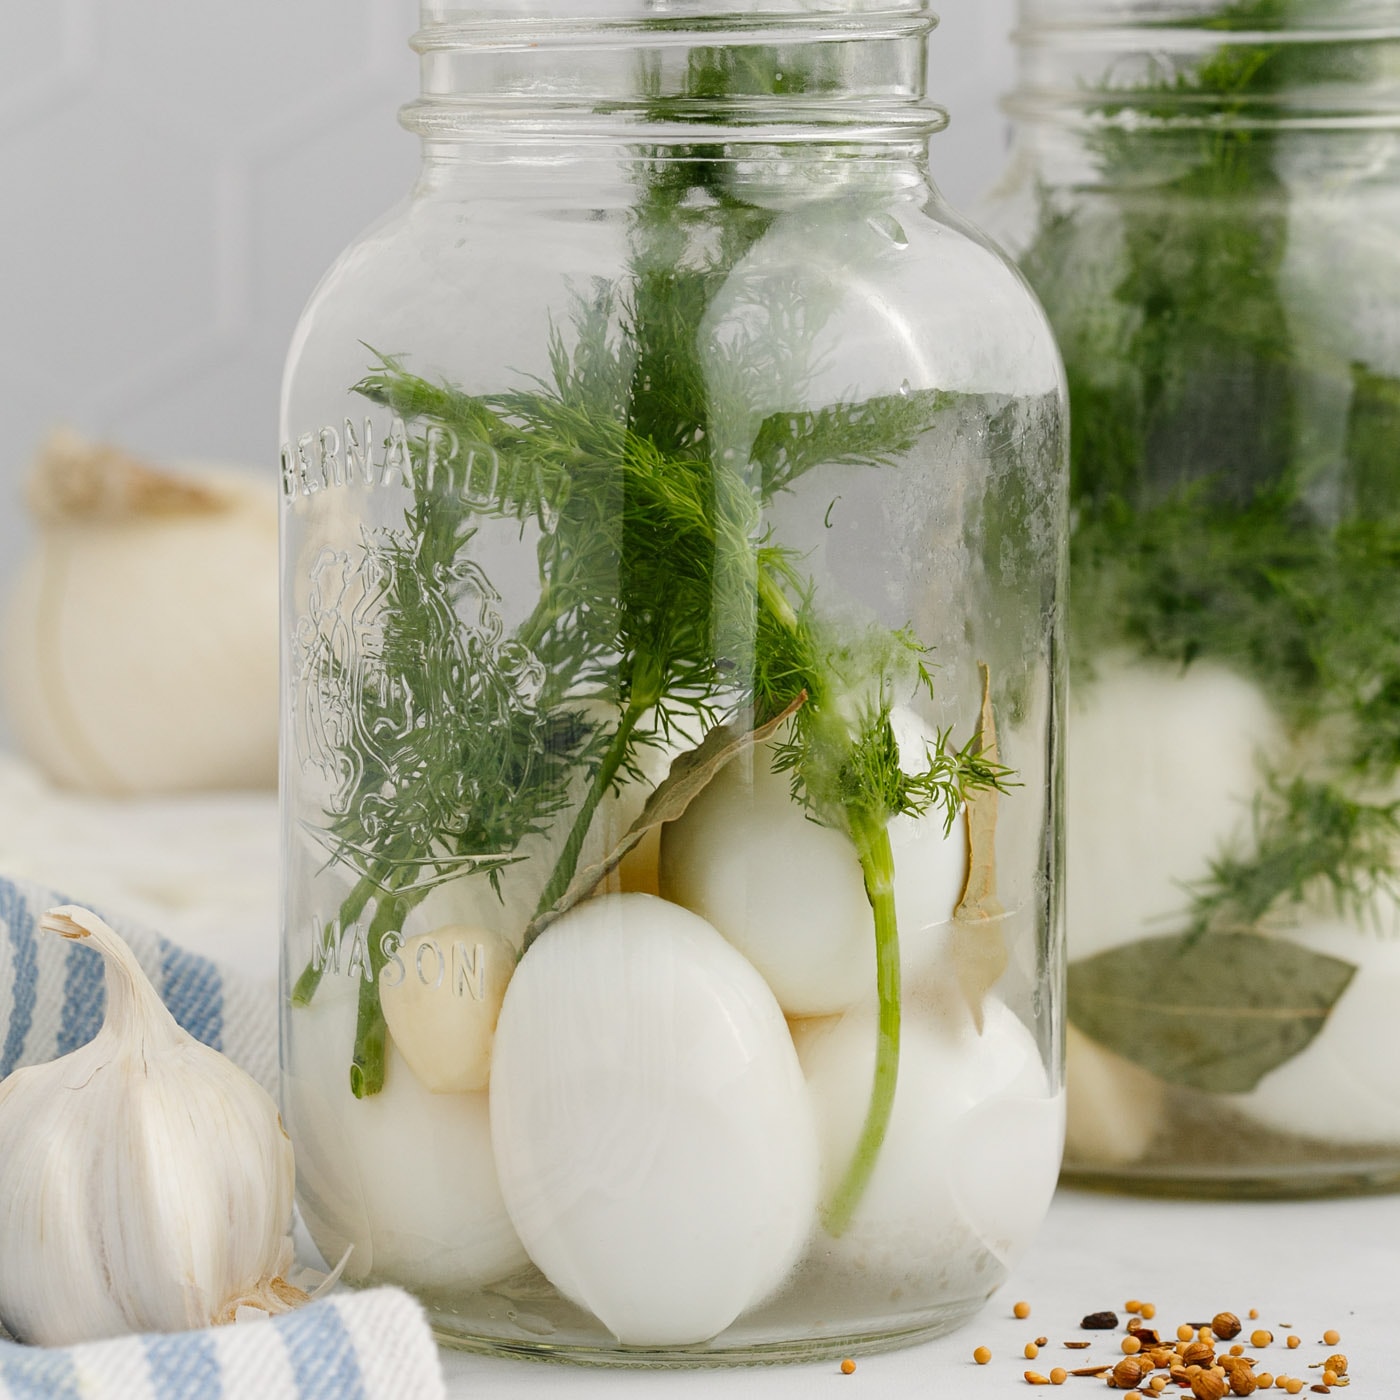 hard boiled eggs and fresh herbs in a mason jar